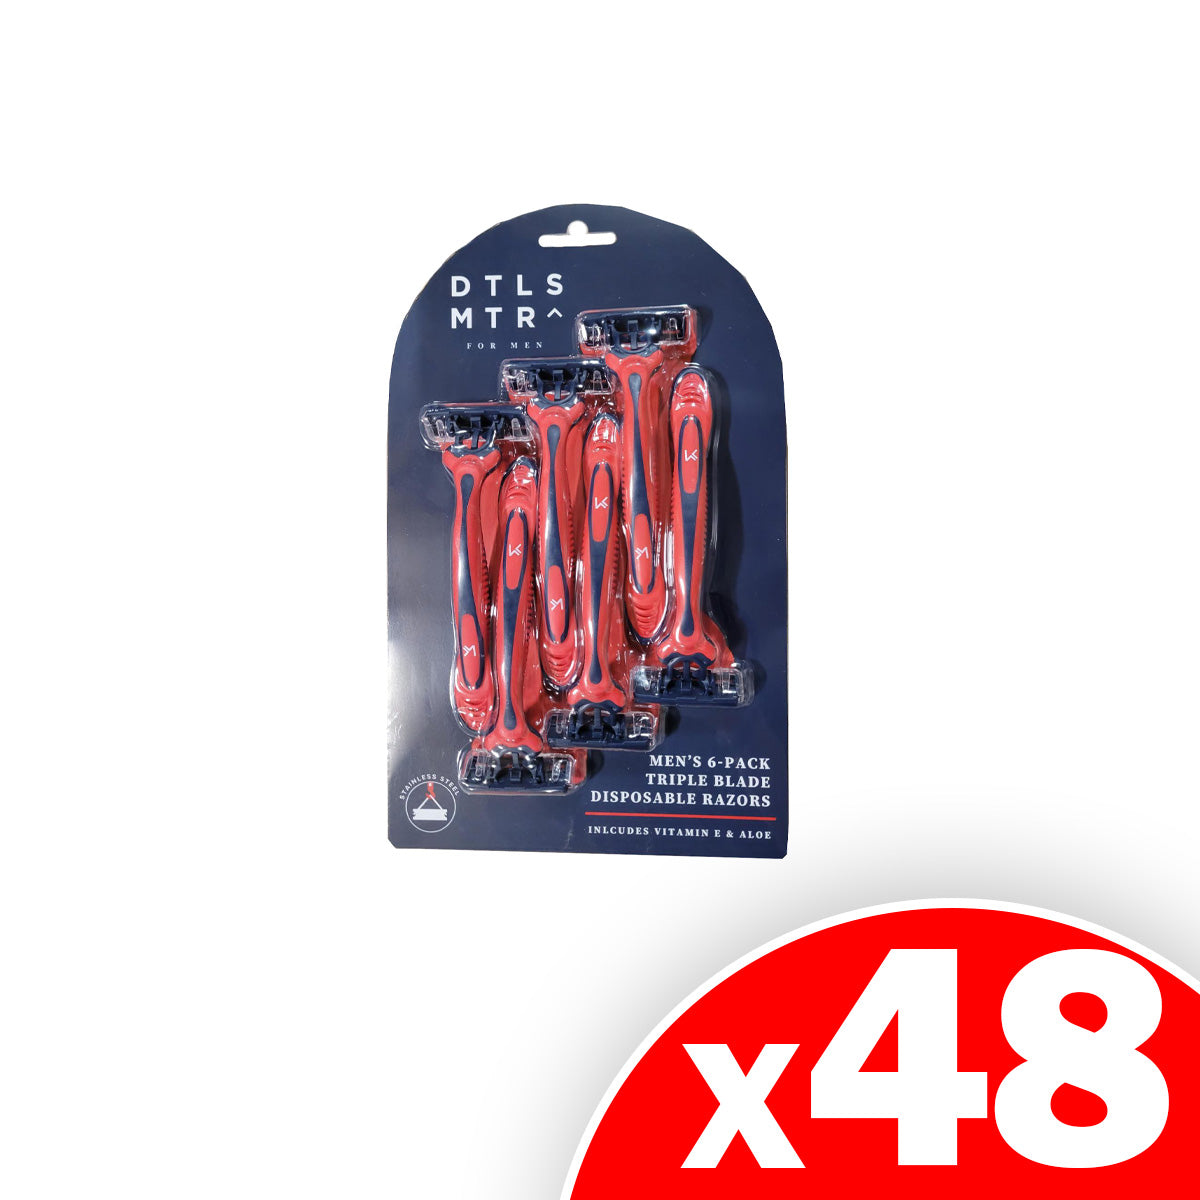 Men's 6pk-Disposable Razors Triple Blade Aloe & Vitamin E (Red/White), 48 Pack